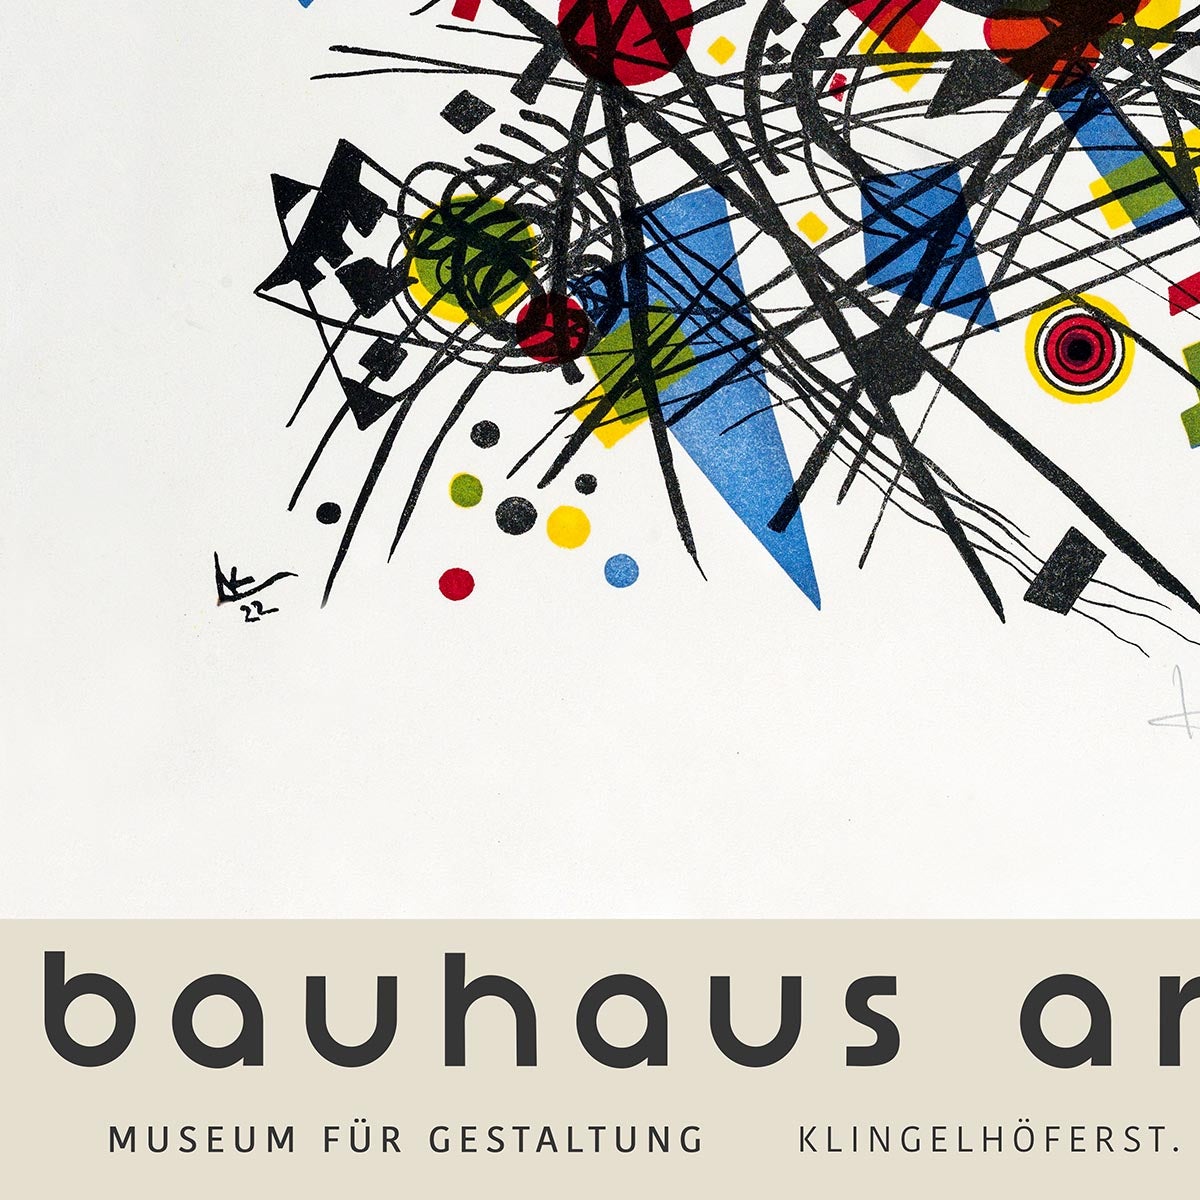 Wassily Kandinsky German Exhibition Poster (Berlin, 2014)